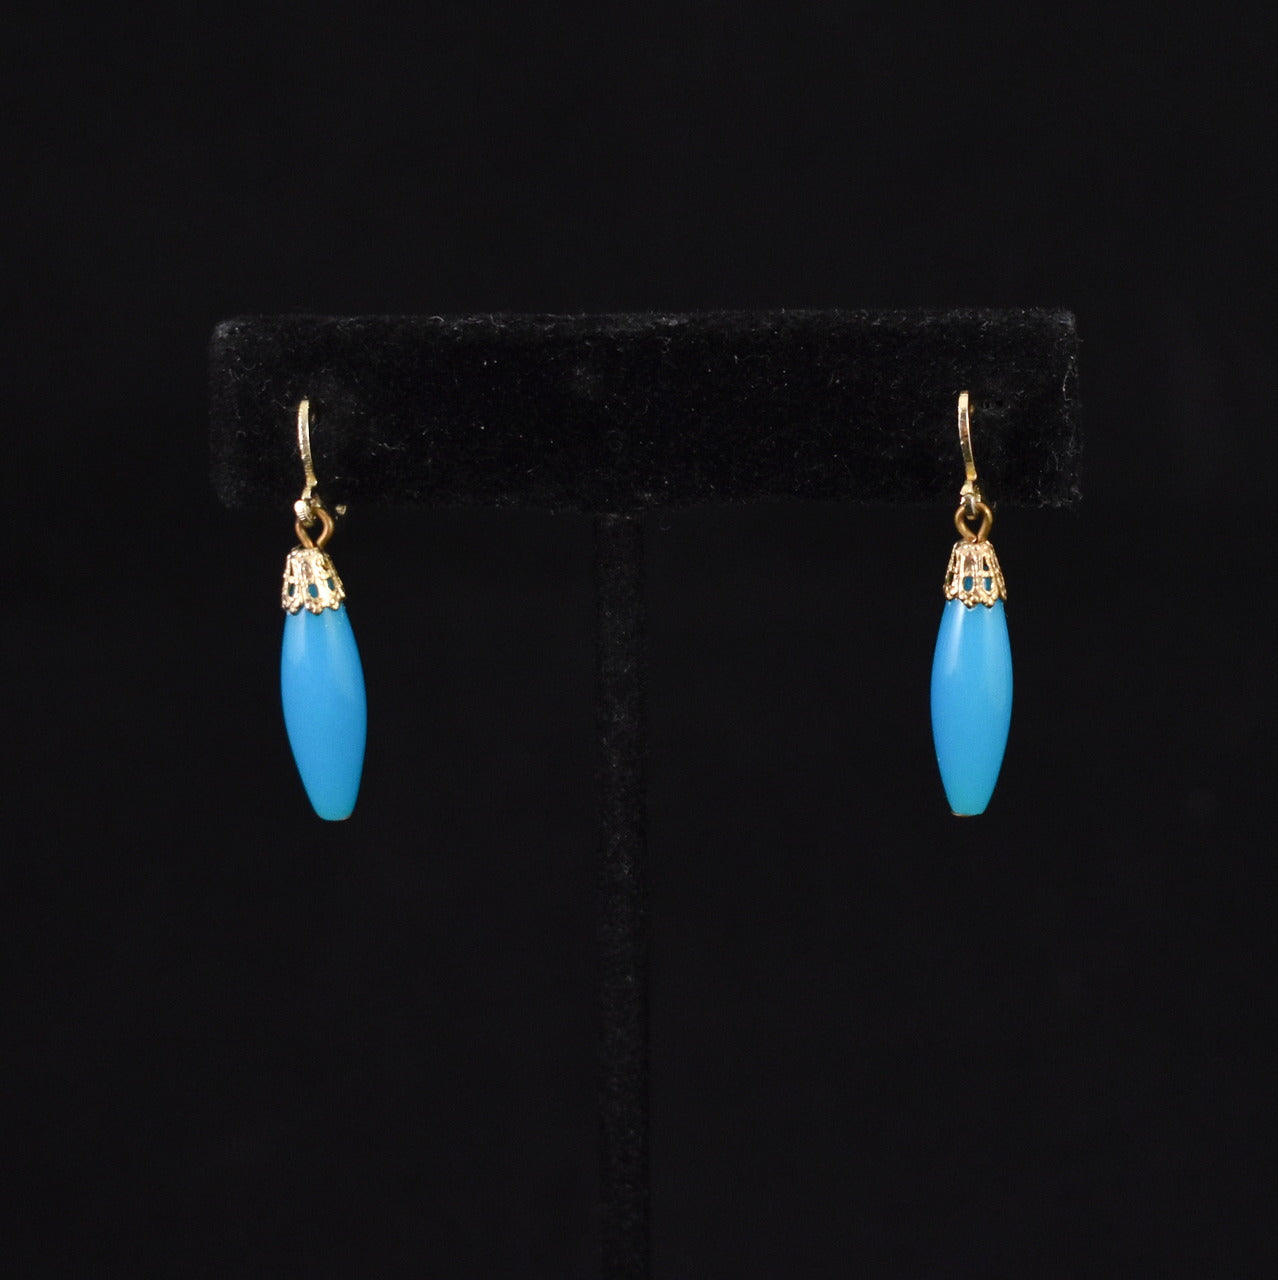 Dangling Long Blue Bead Earrings